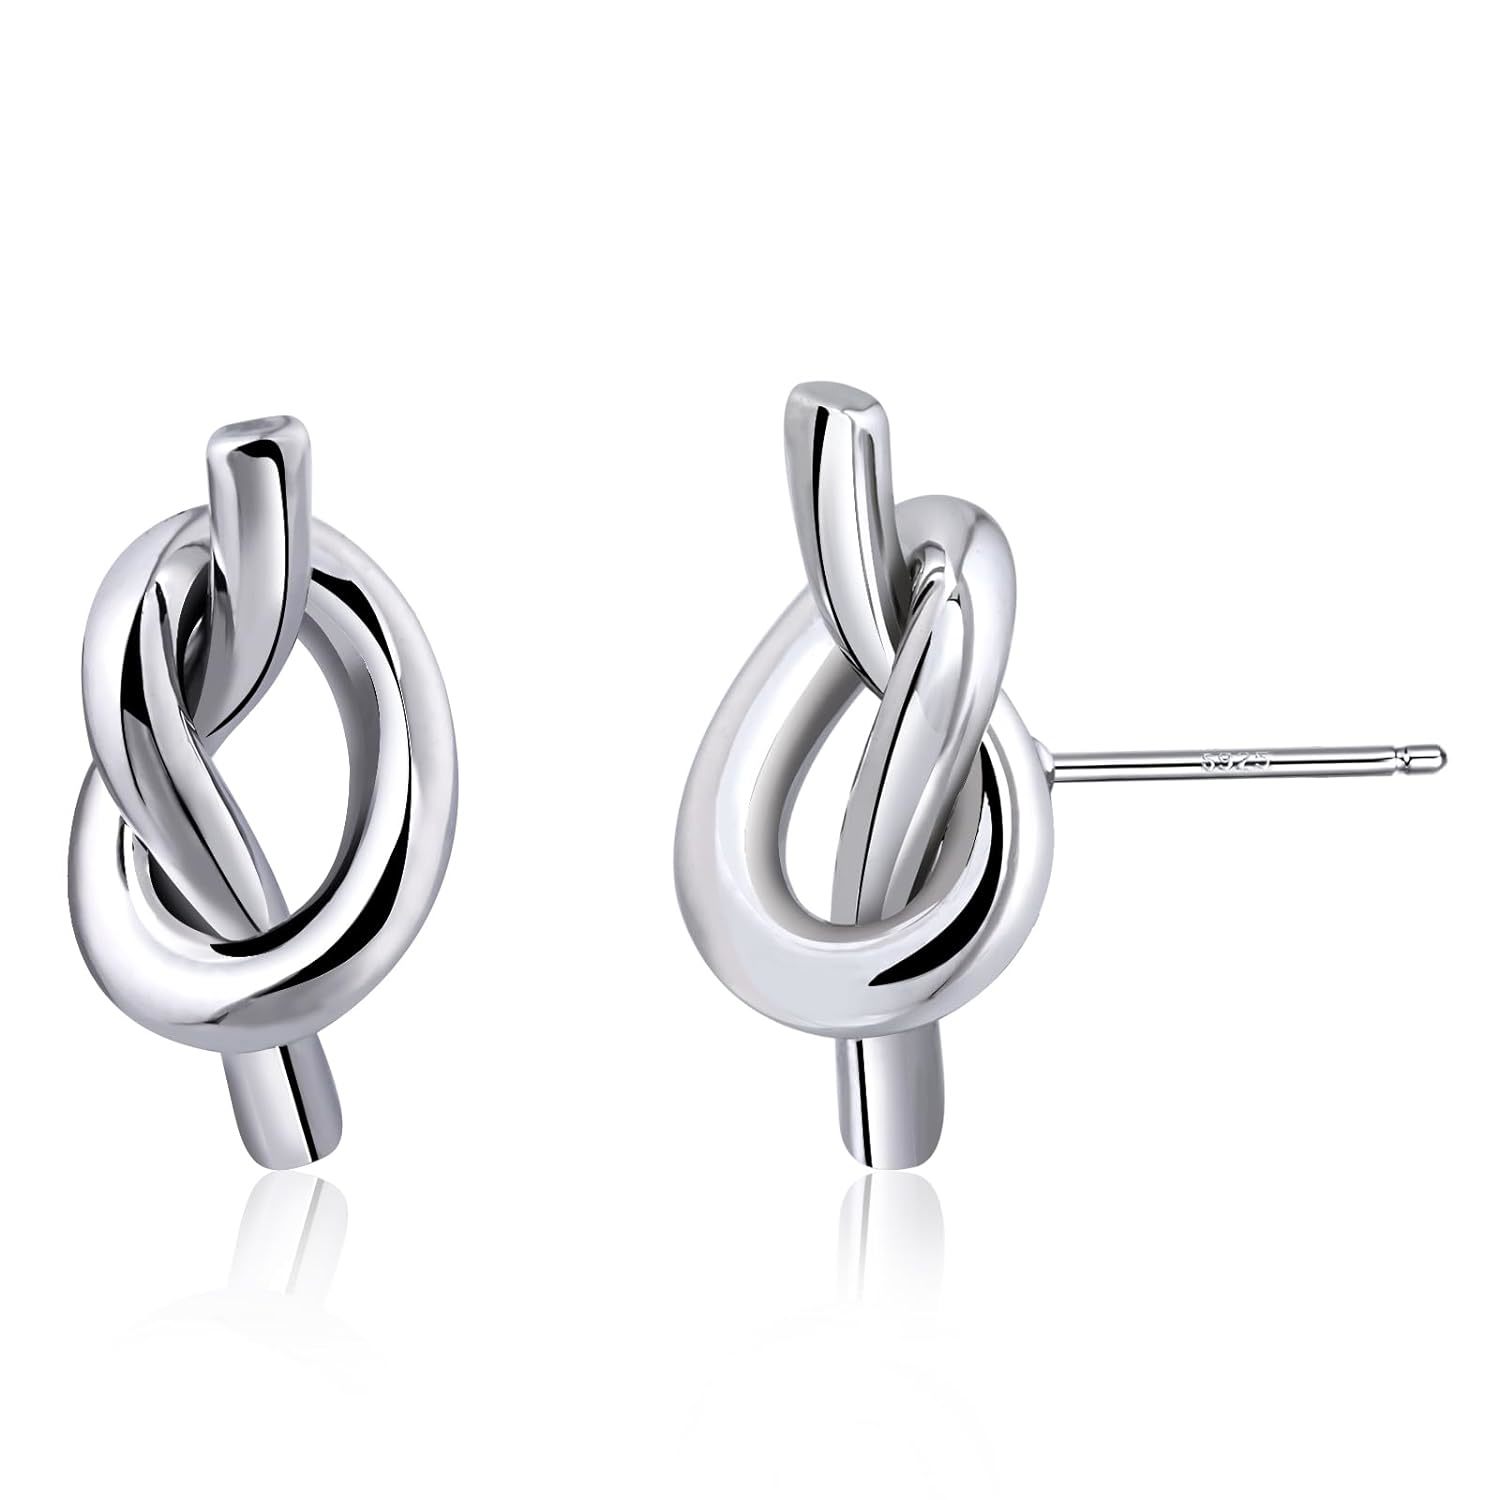 Primary image for 925 Sterling Silver Love Knot Earrings Knot Stud Earrings for Women Handmade Cut